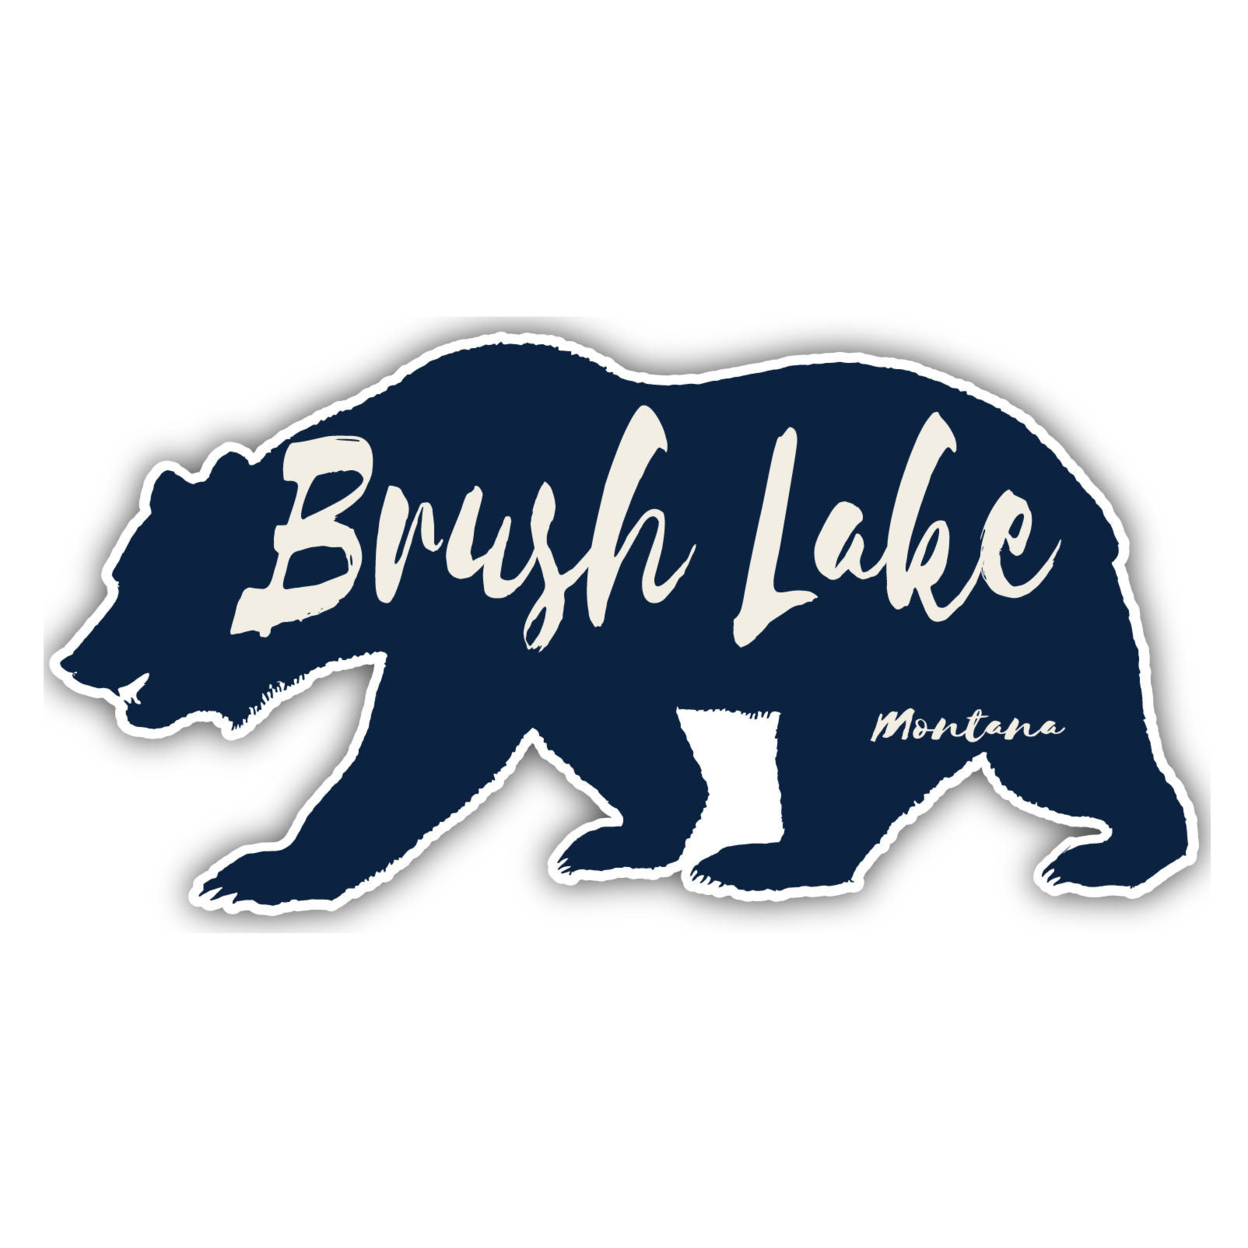 Brush Lake Montana Souvenir Decorative Stickers (Choose Theme And Size) - 4-Pack, 10-Inch, Bear